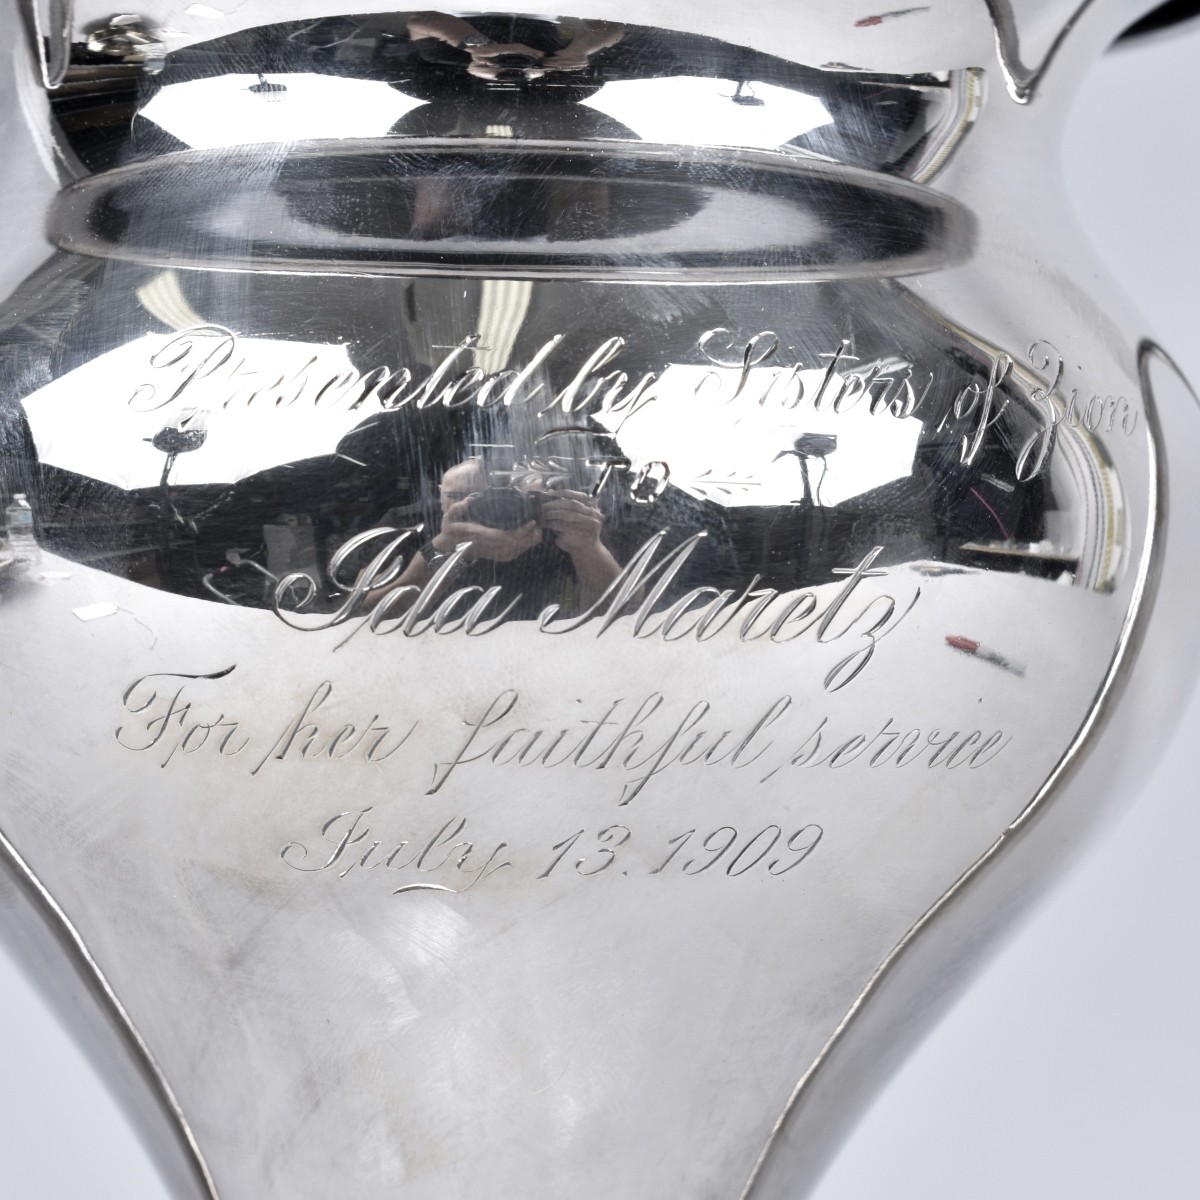 Art Nouveau Sterling Trophy Vase